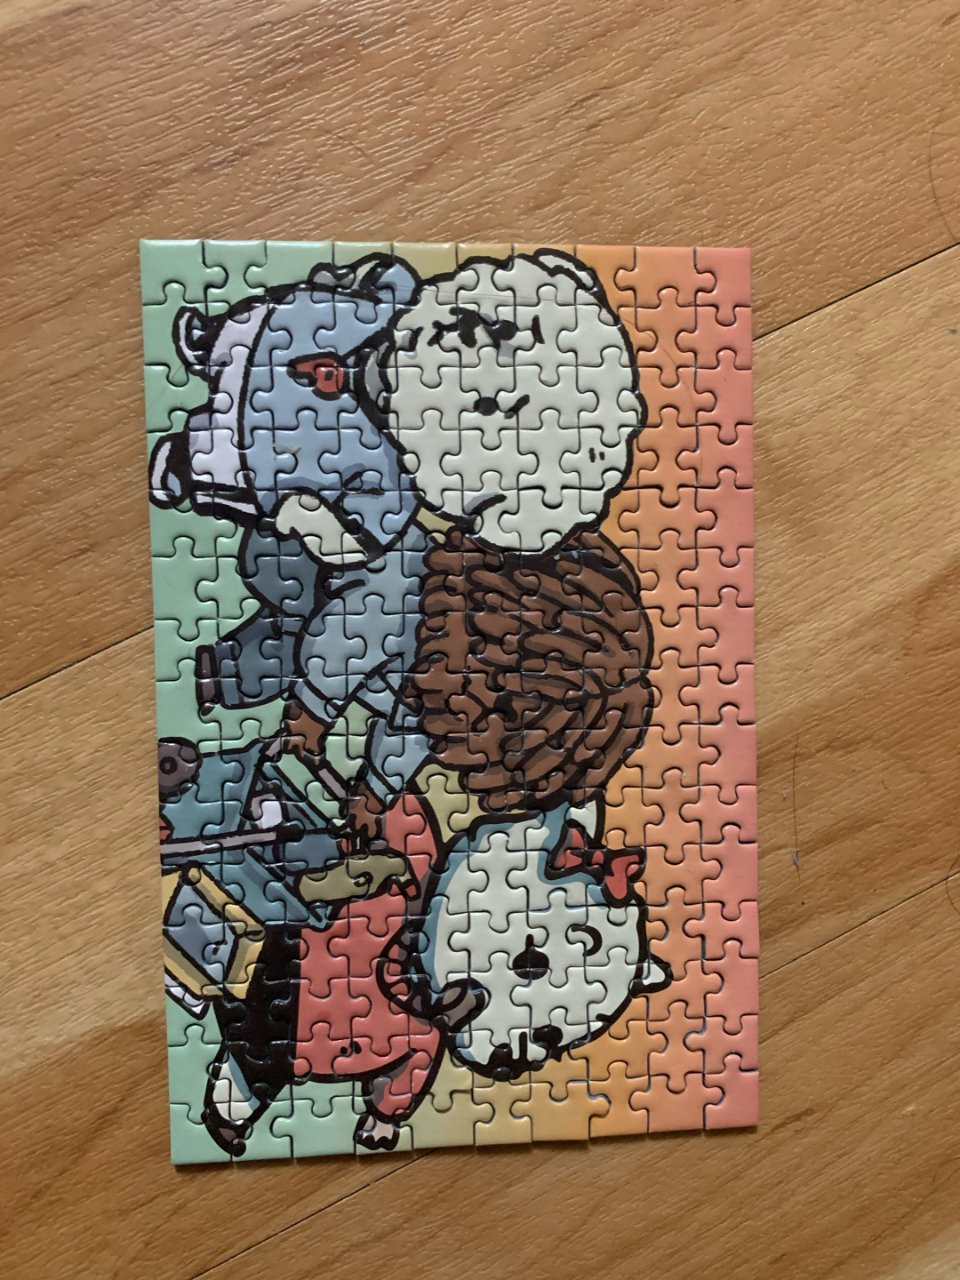 迷你puzzle集合